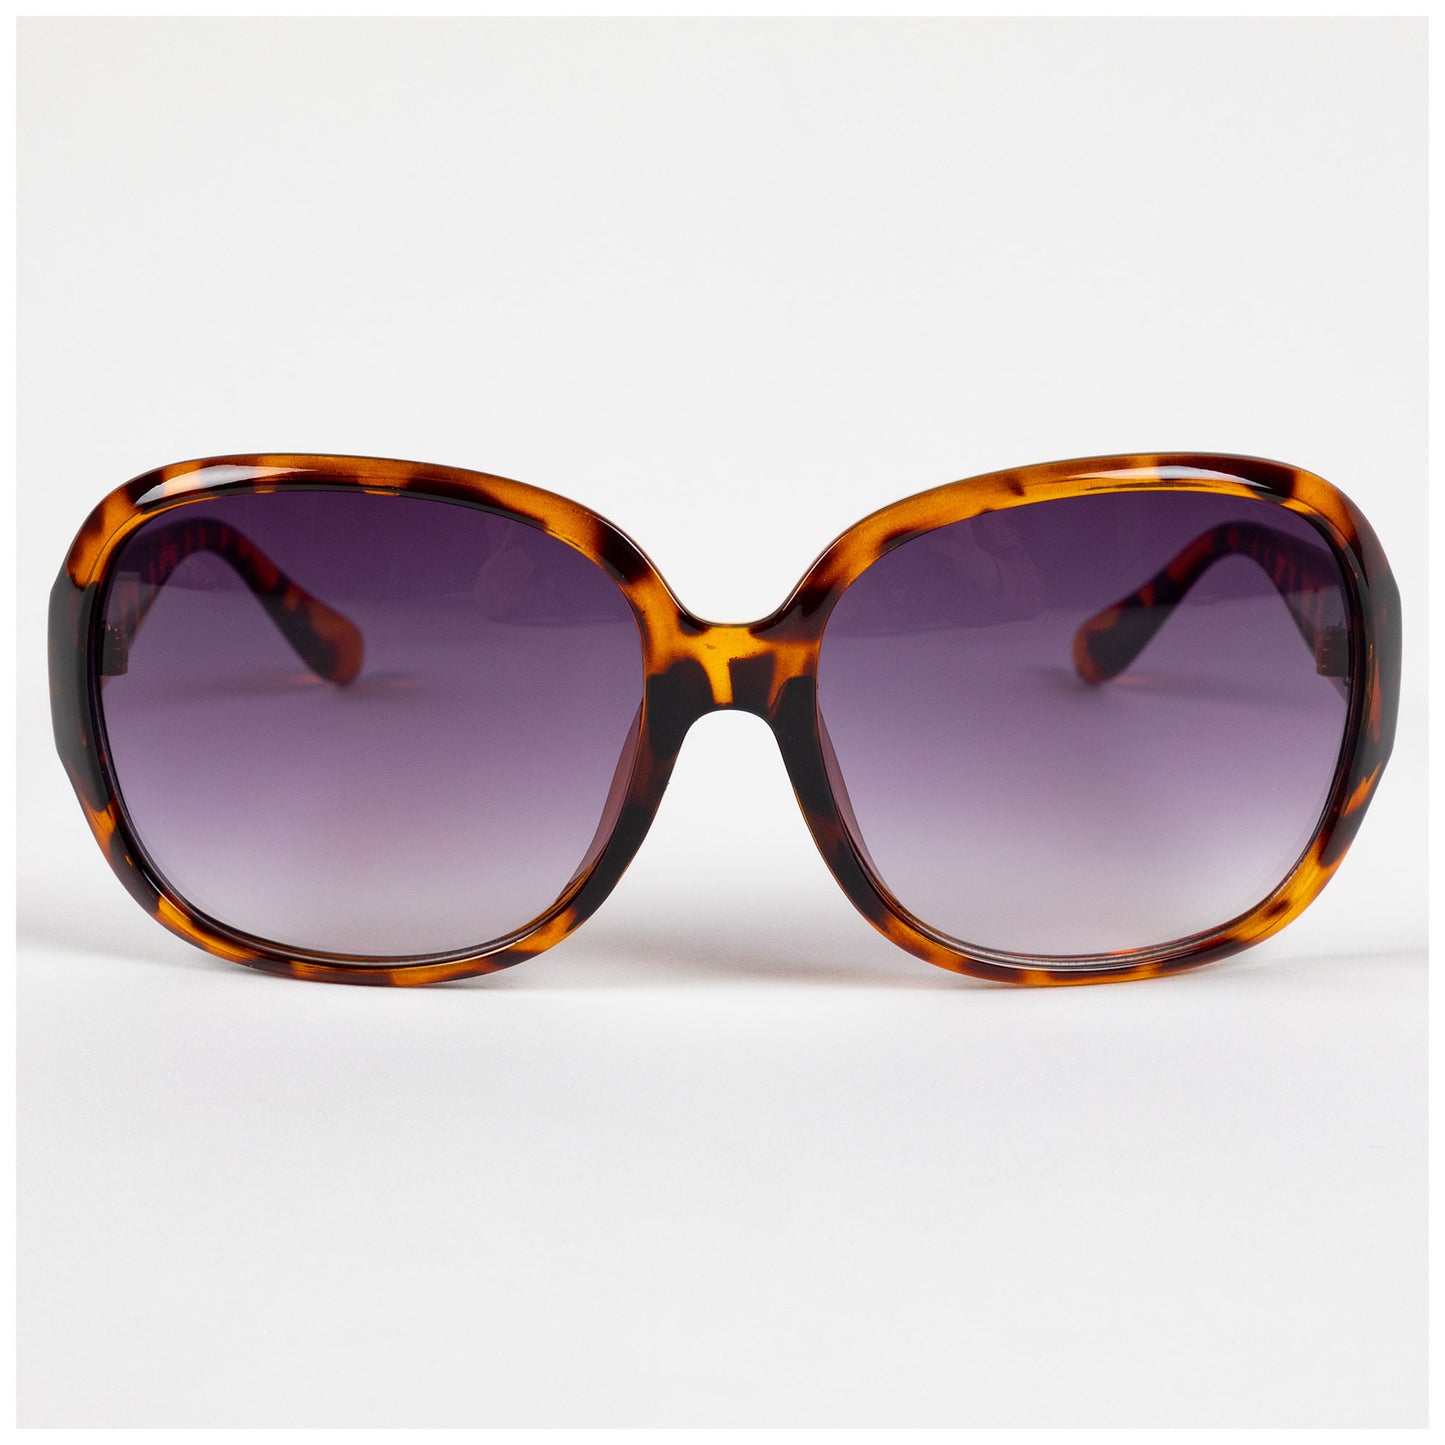 Dragonfly Summer Sunglasses!